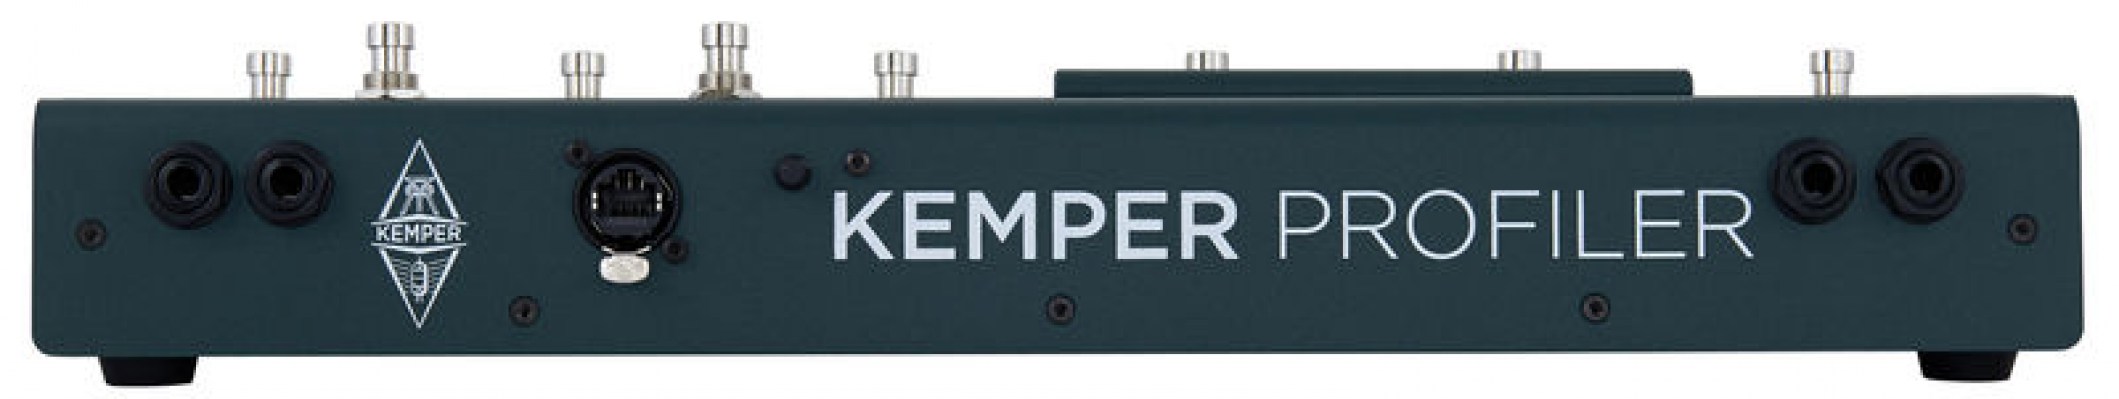 Kemper Profiling Amp Head BK Set